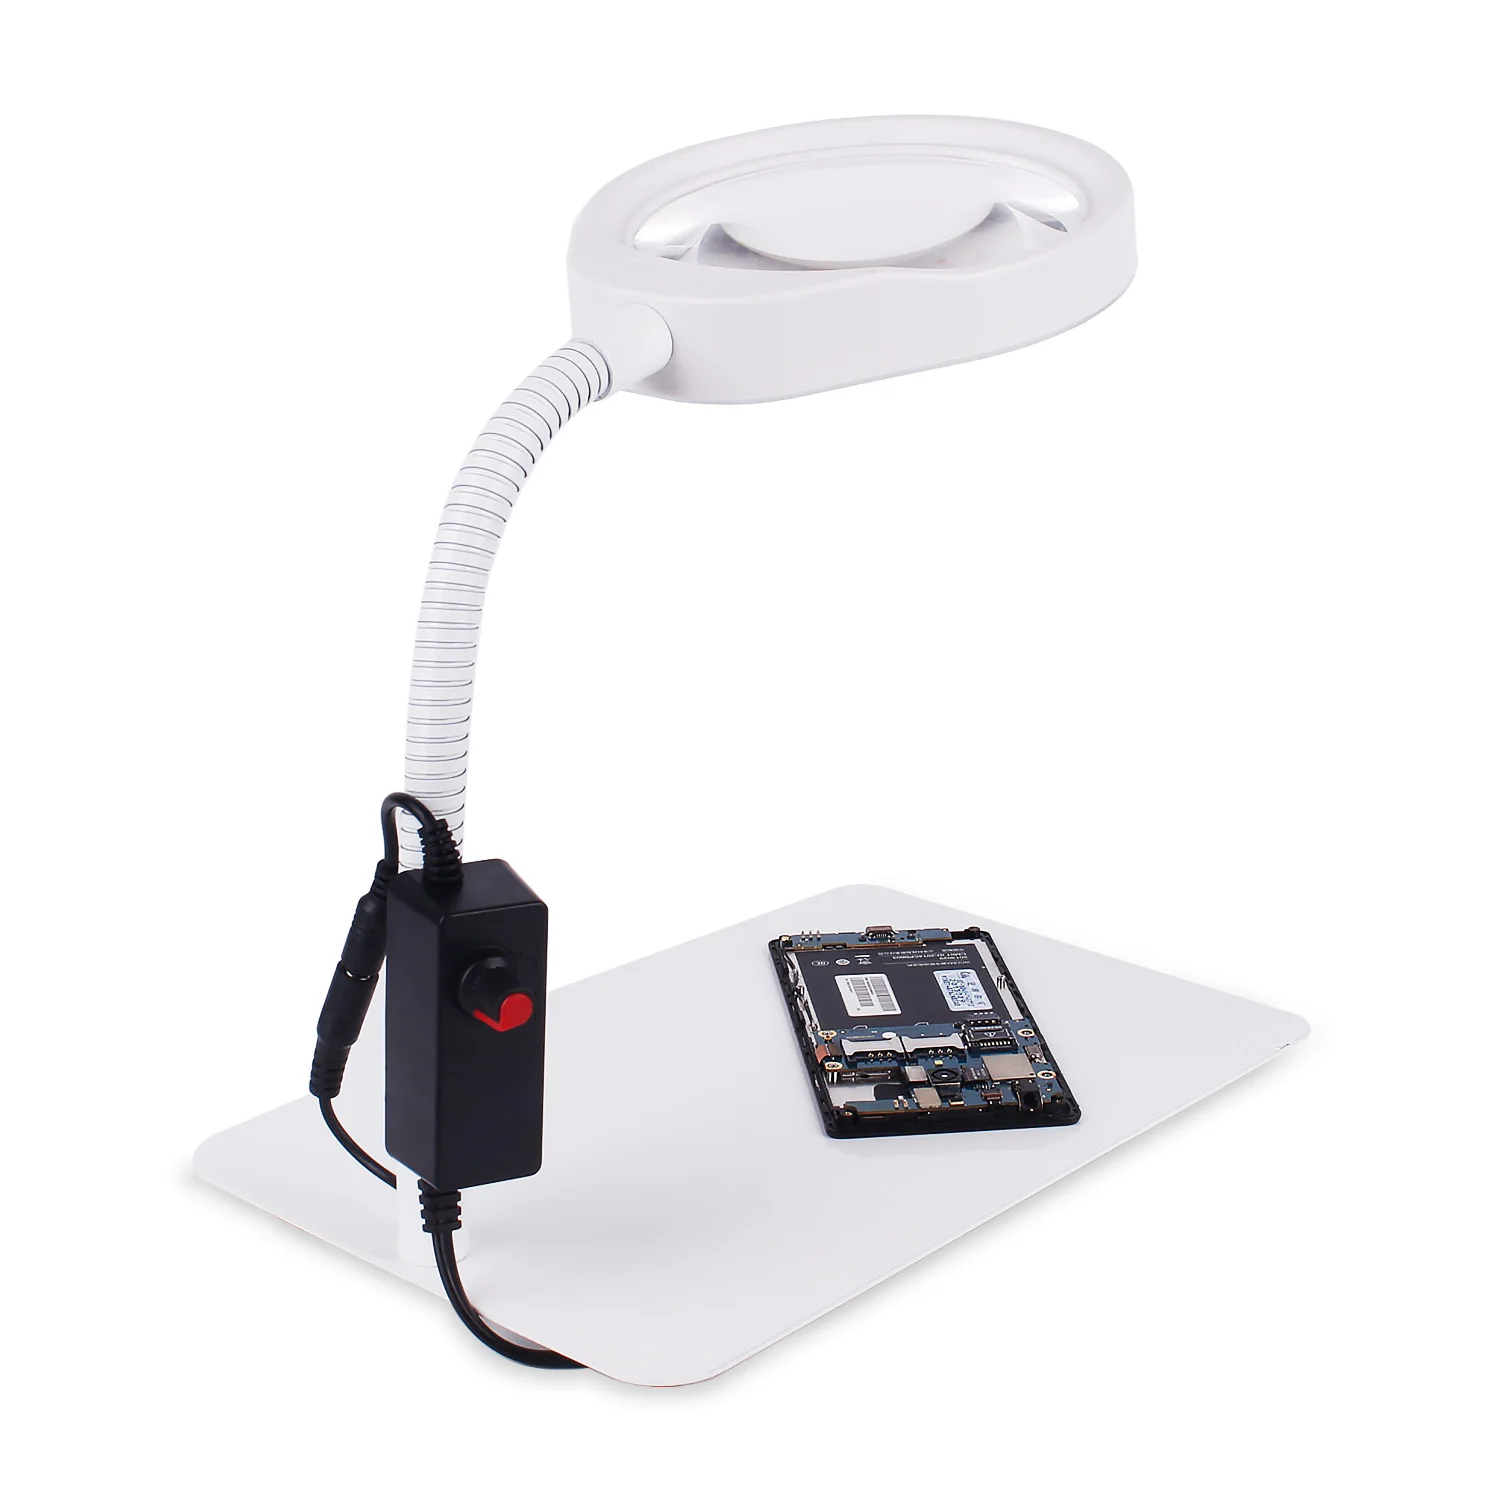 EU UK UL Plug LED Illuminating Magnifier Lamp Flexible Foldable Magnifying Glass Desk Table Reading Lamp Light with USB